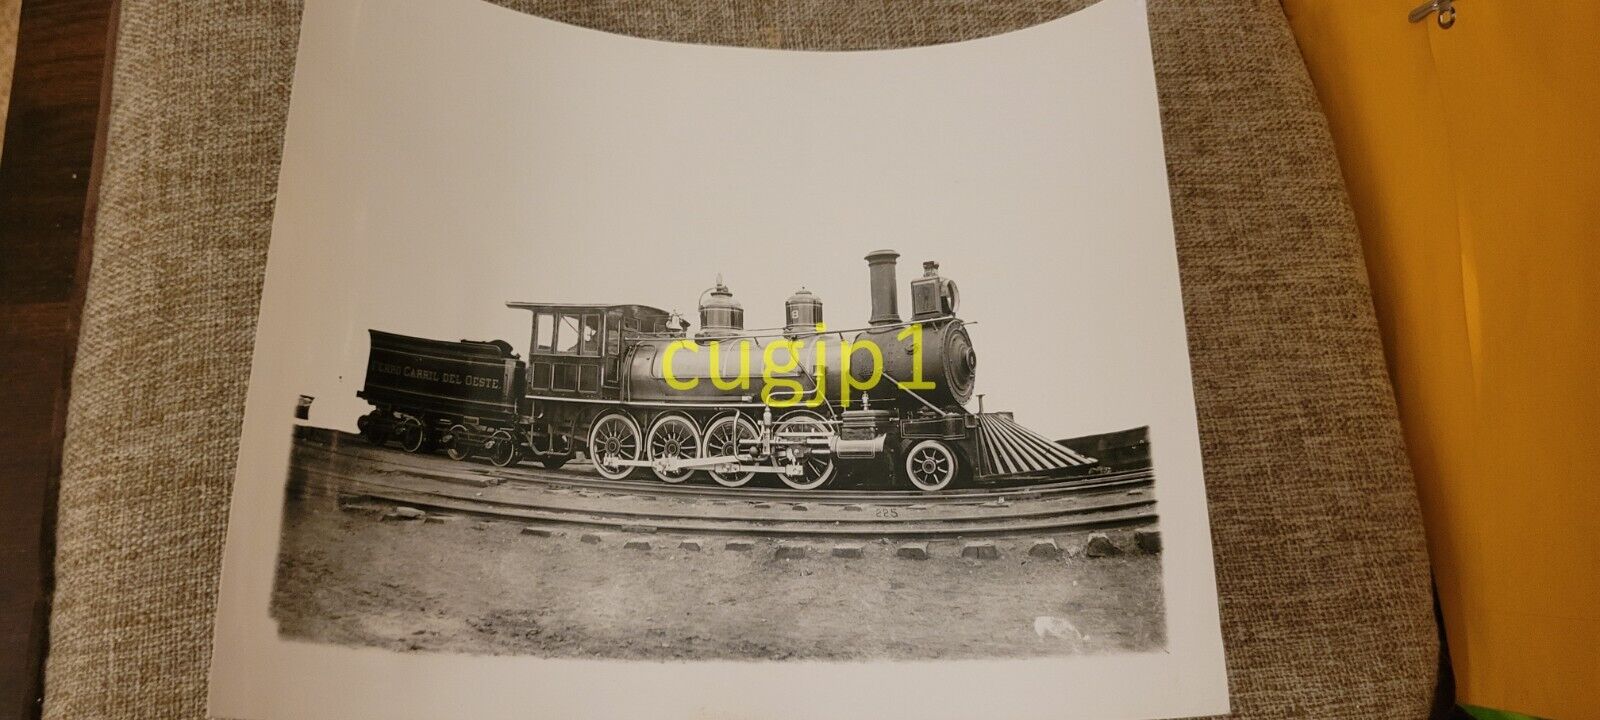 R412 Train Photograph Baldwin Locomotive Works YEAR 1881 NEG 225 FC DEL OESTE